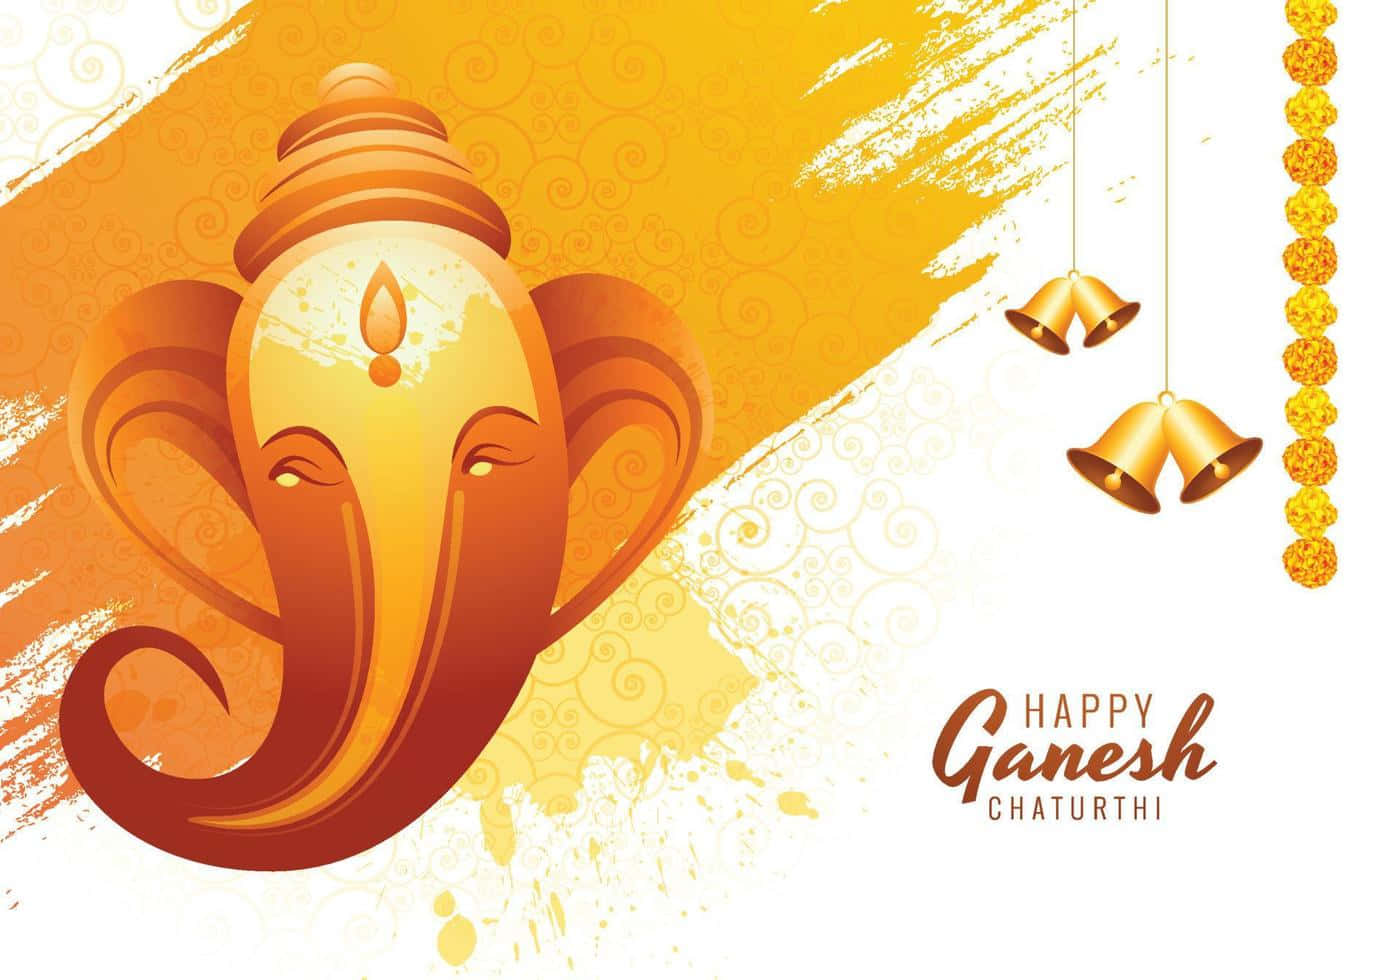 Celebrating Ganesh Chaturthi